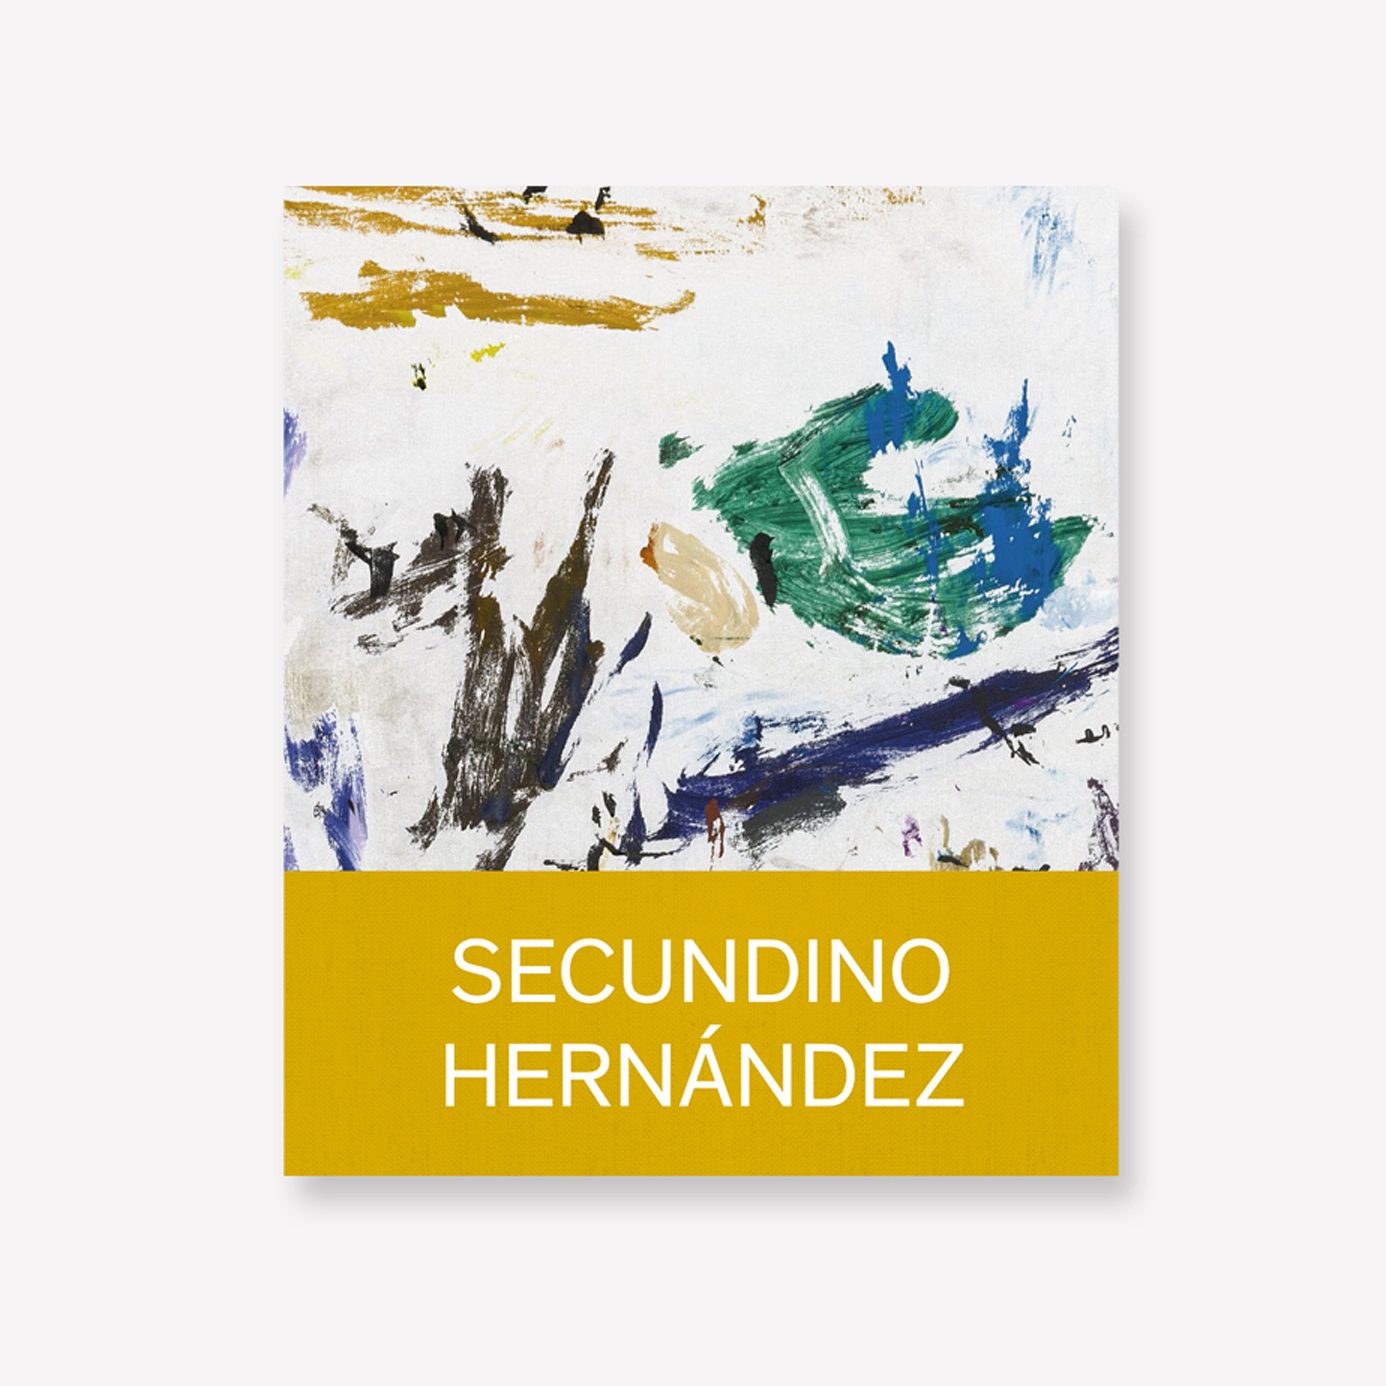 Secundino Hernández